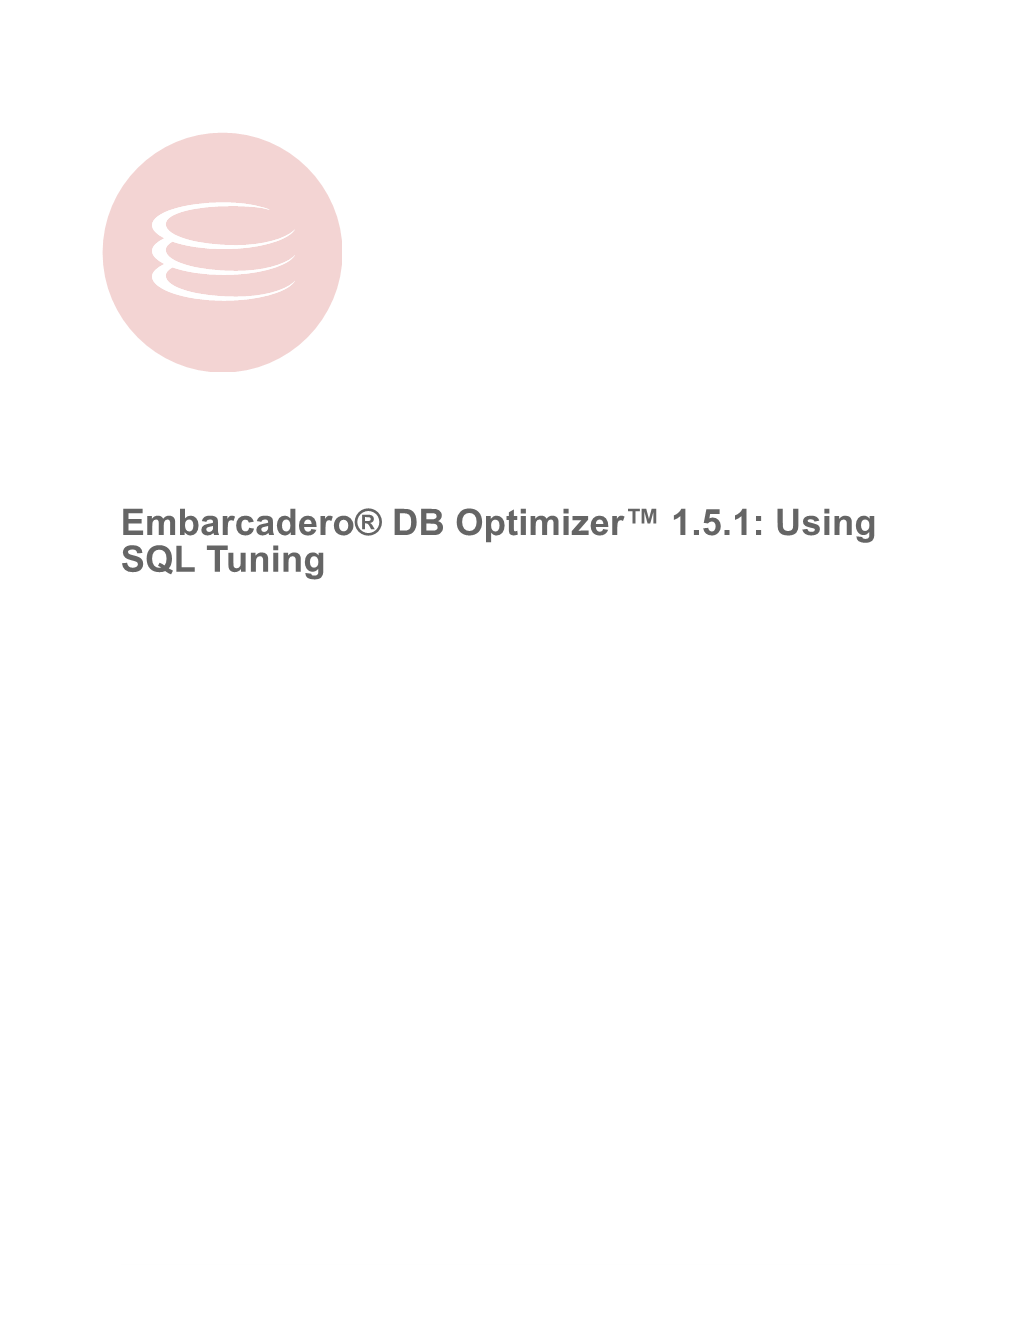 Using SQL Tuning Copyright © 1994-2009 Embarcadero Technologies, Inc